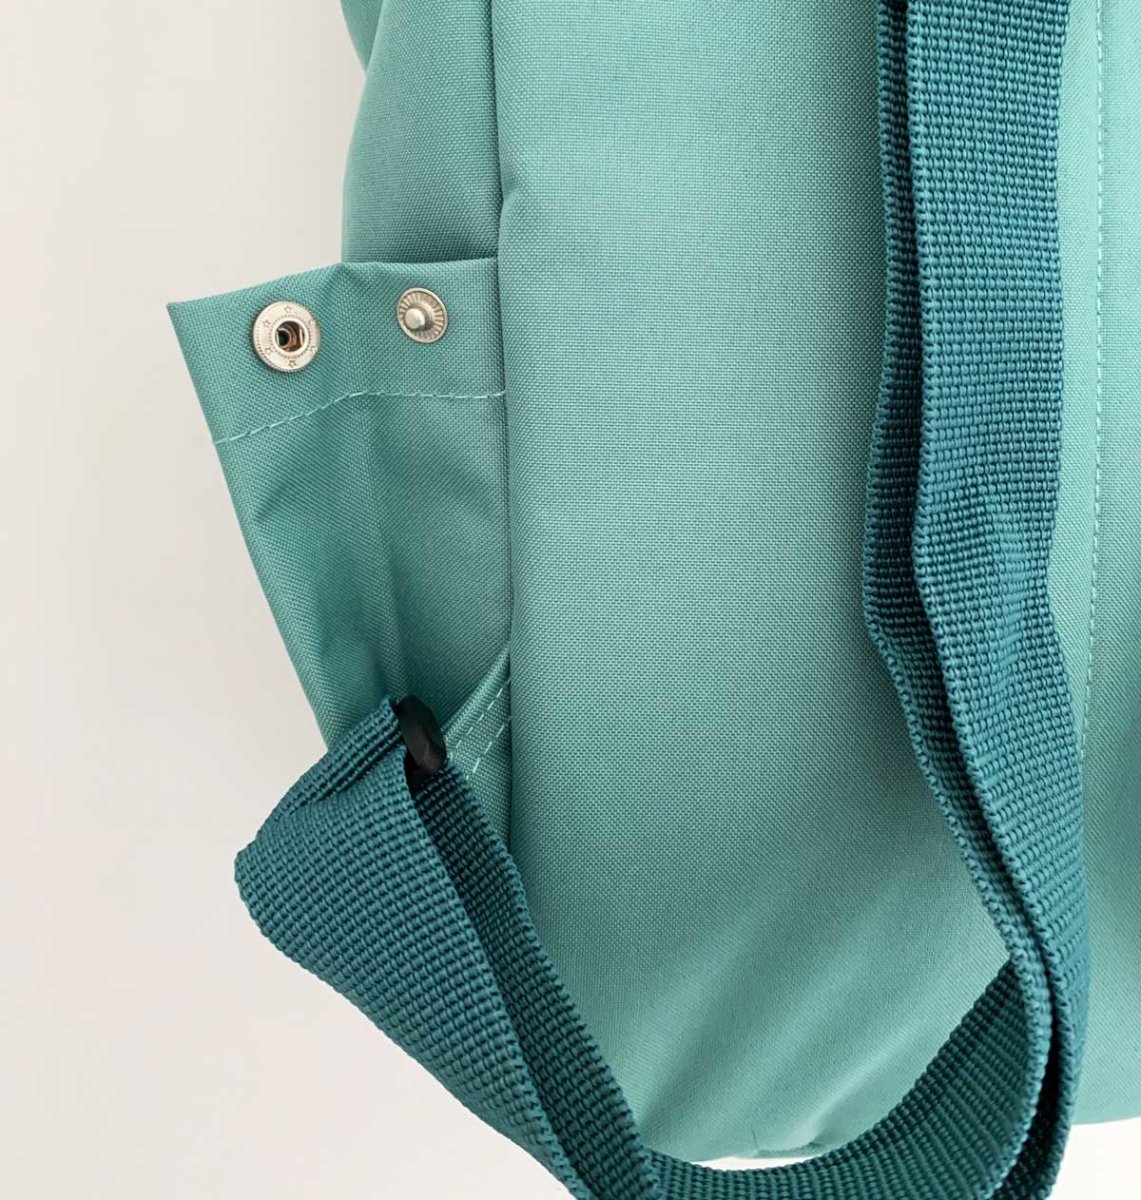 Mallard Duck Mini Roll-top Recycled Backpack - Blue Panda